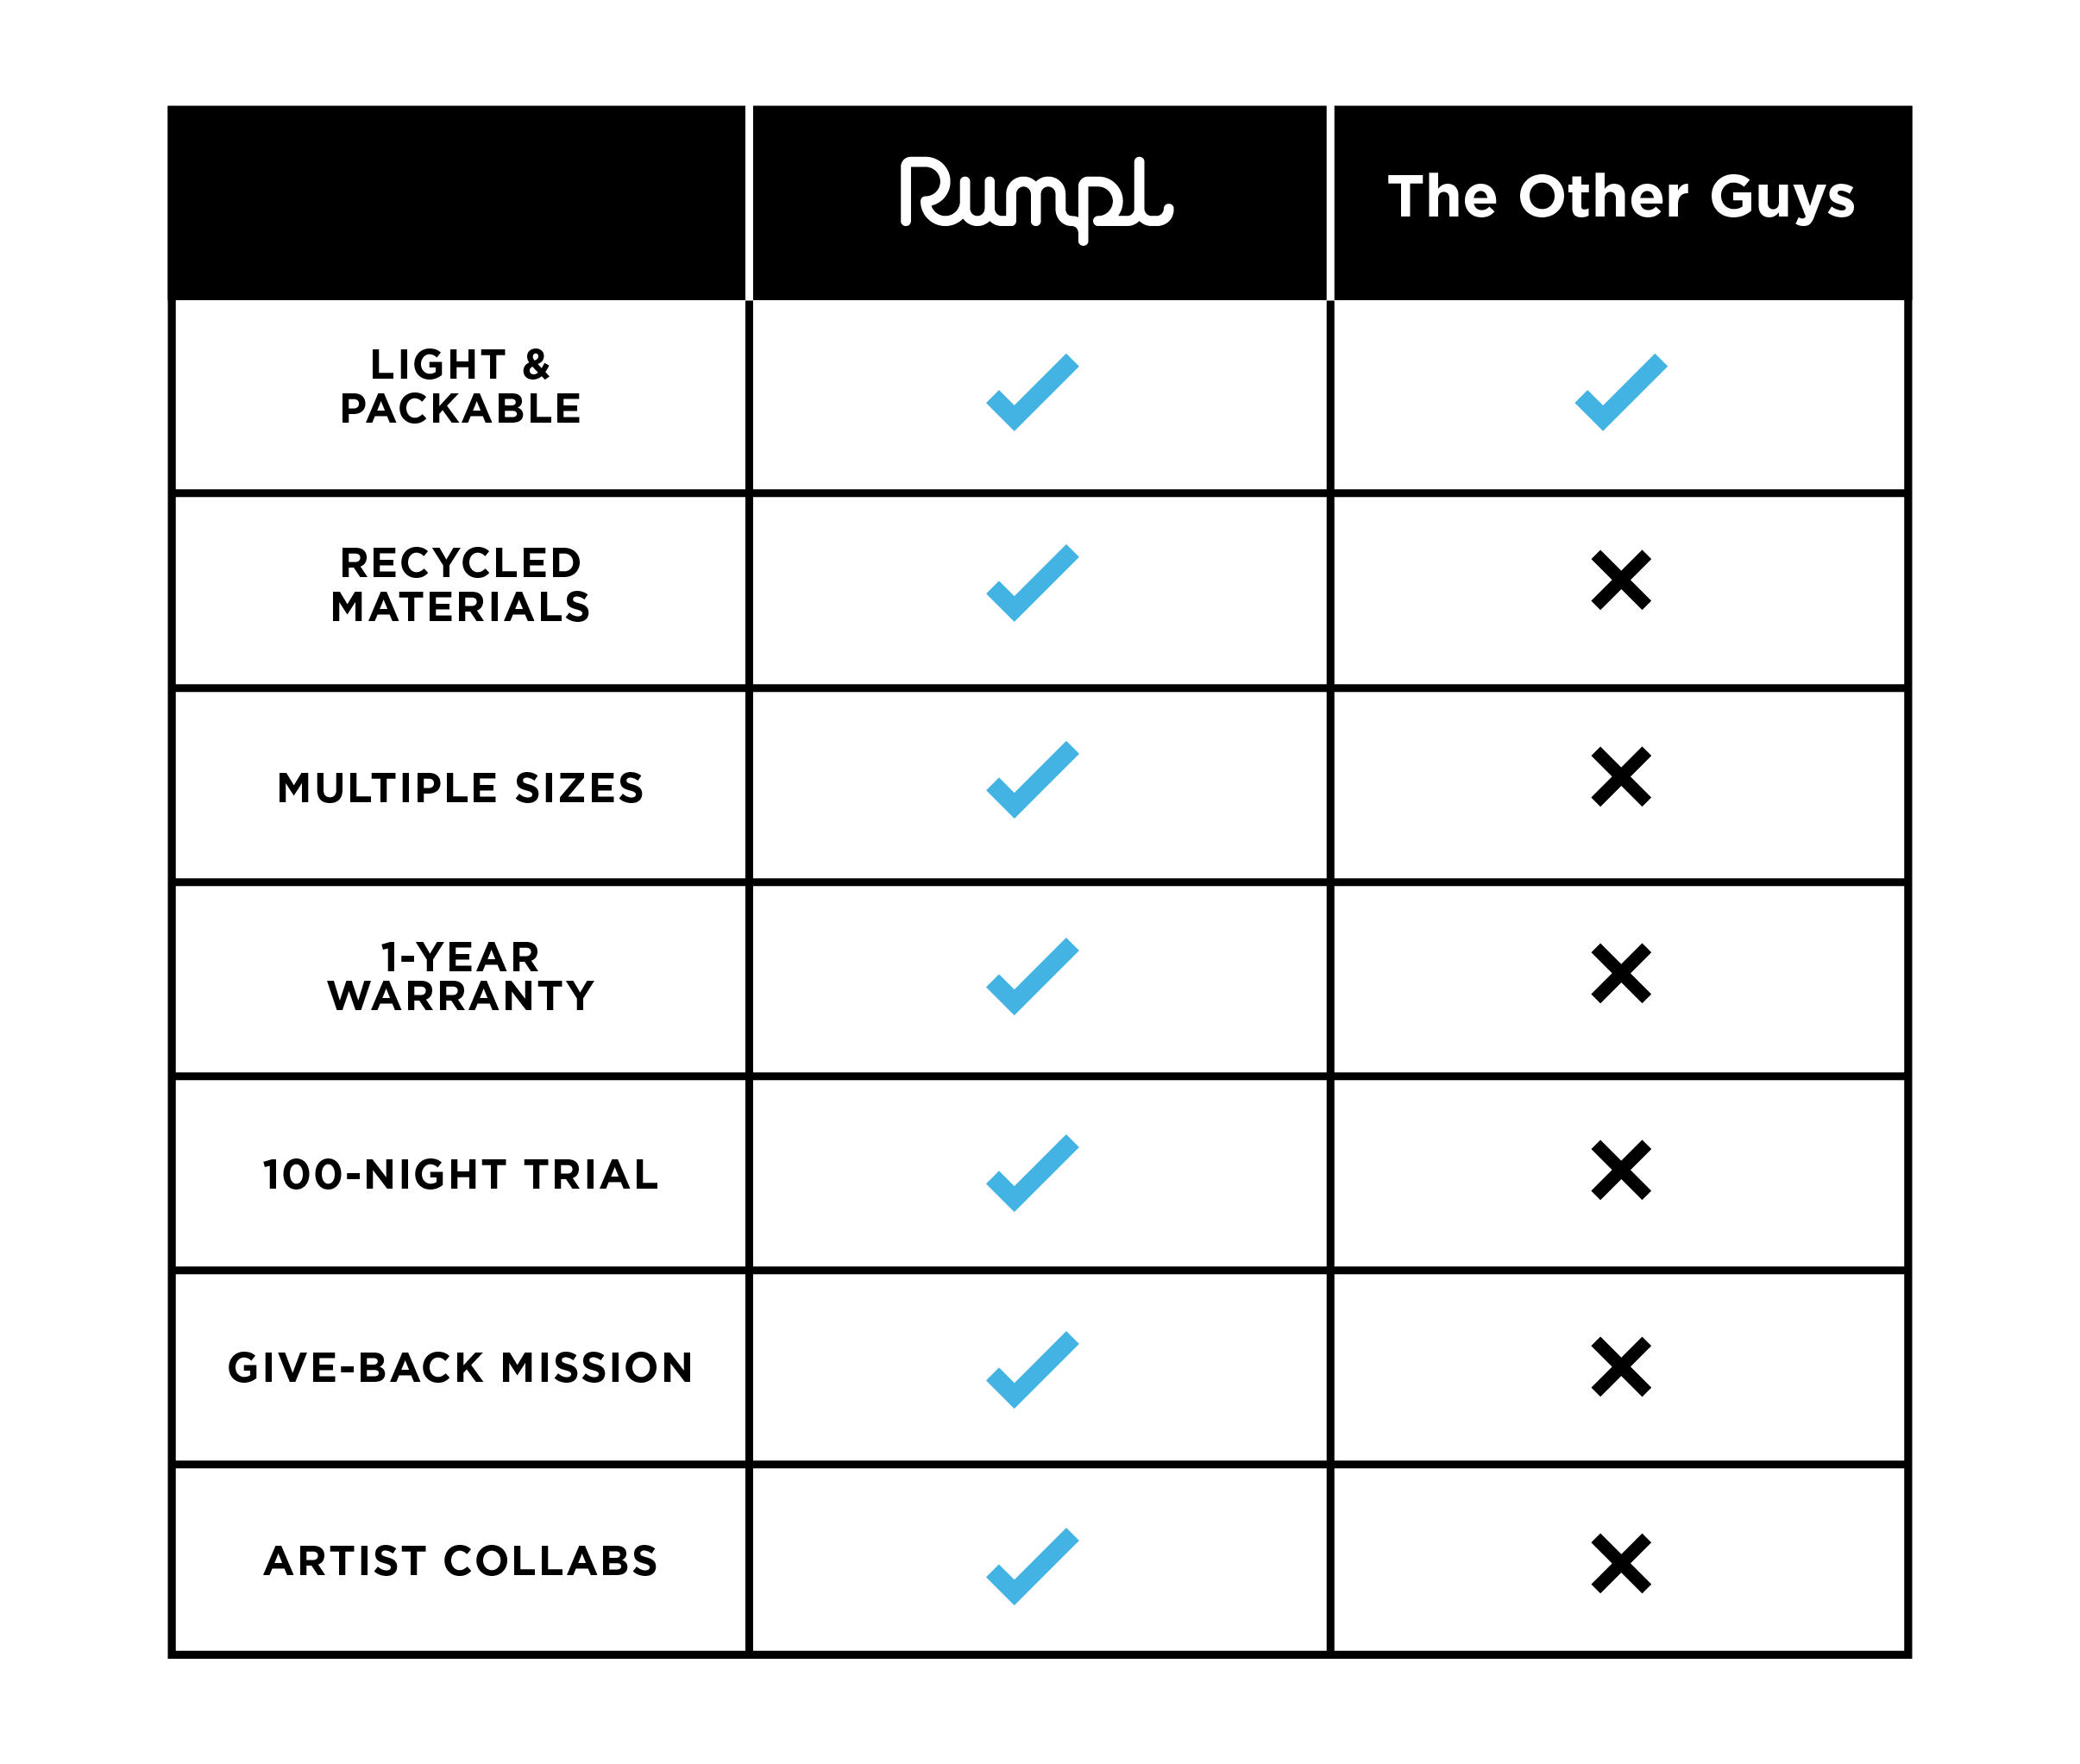 Rumpl comparison chart